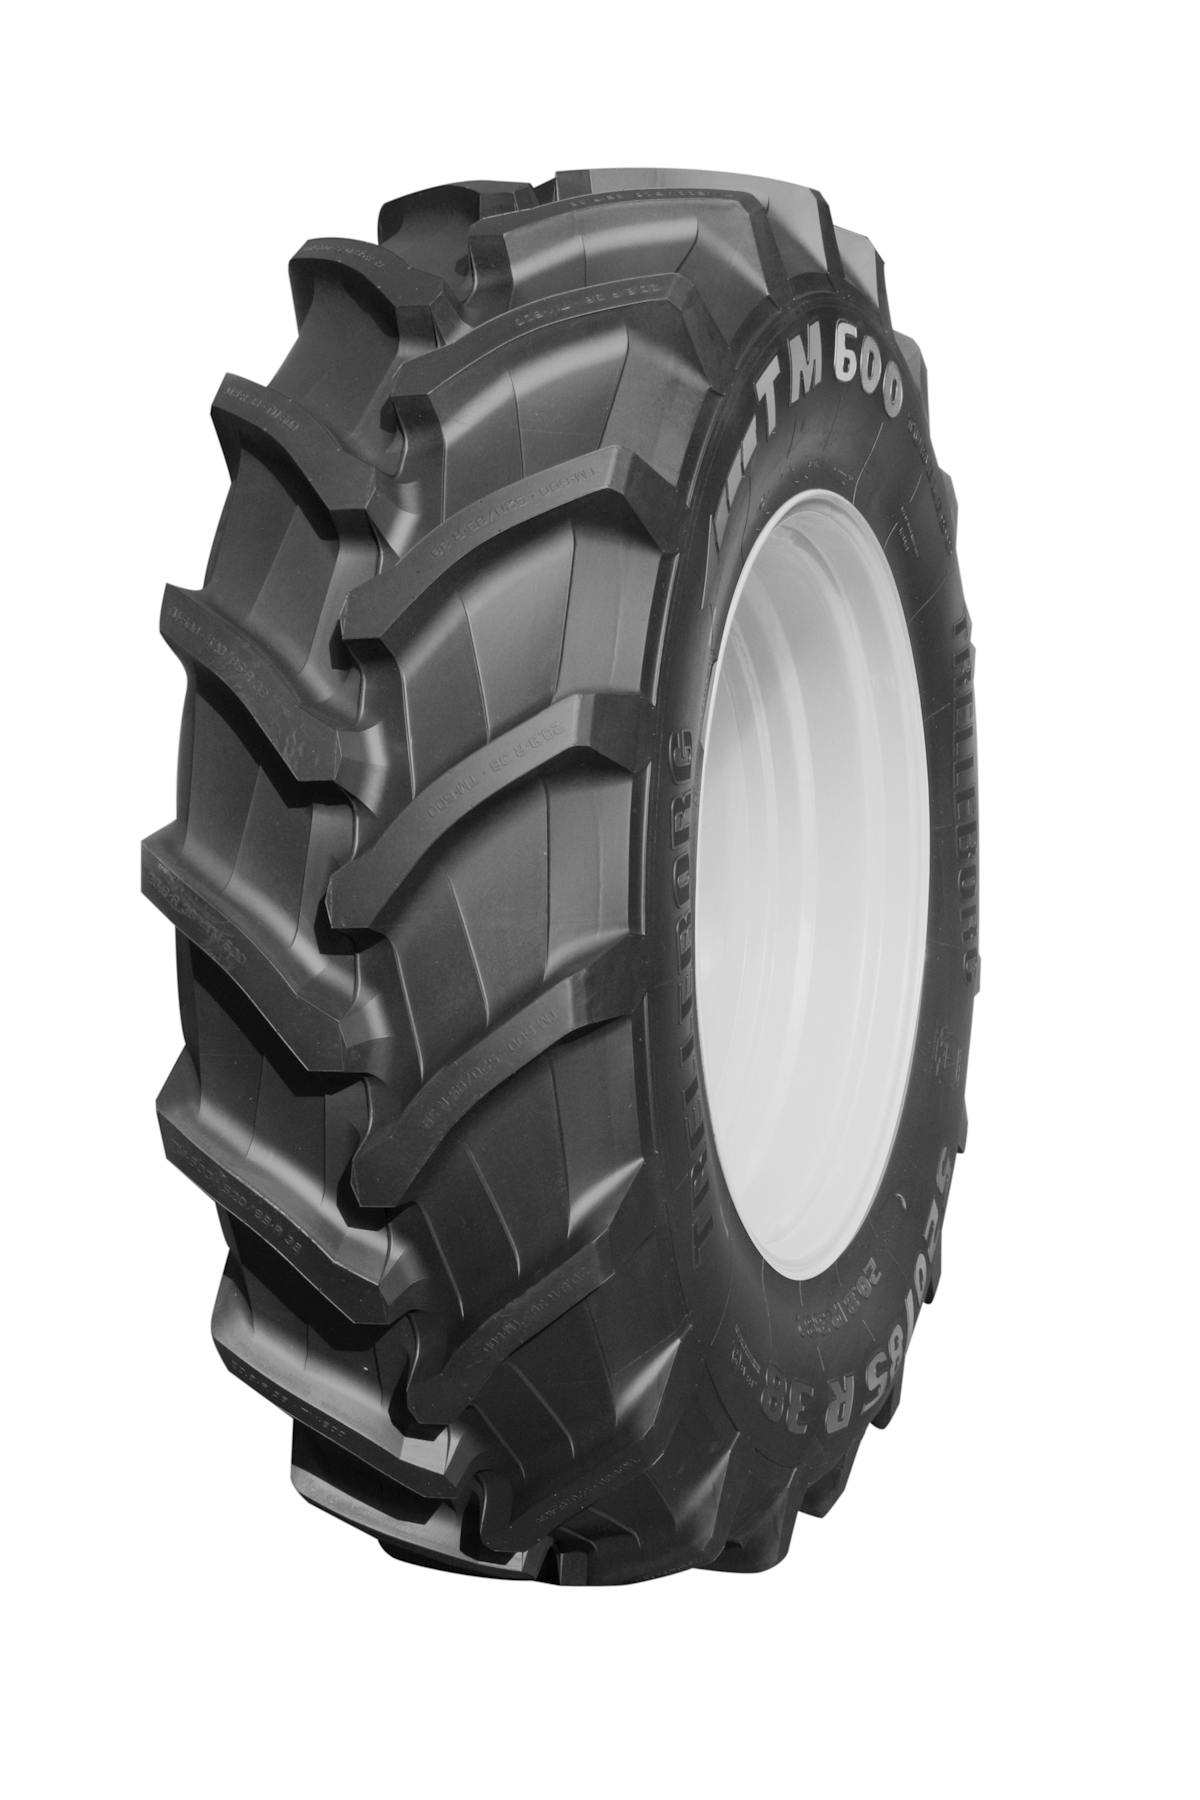 trelleborg-expands-row-crop-tire-line